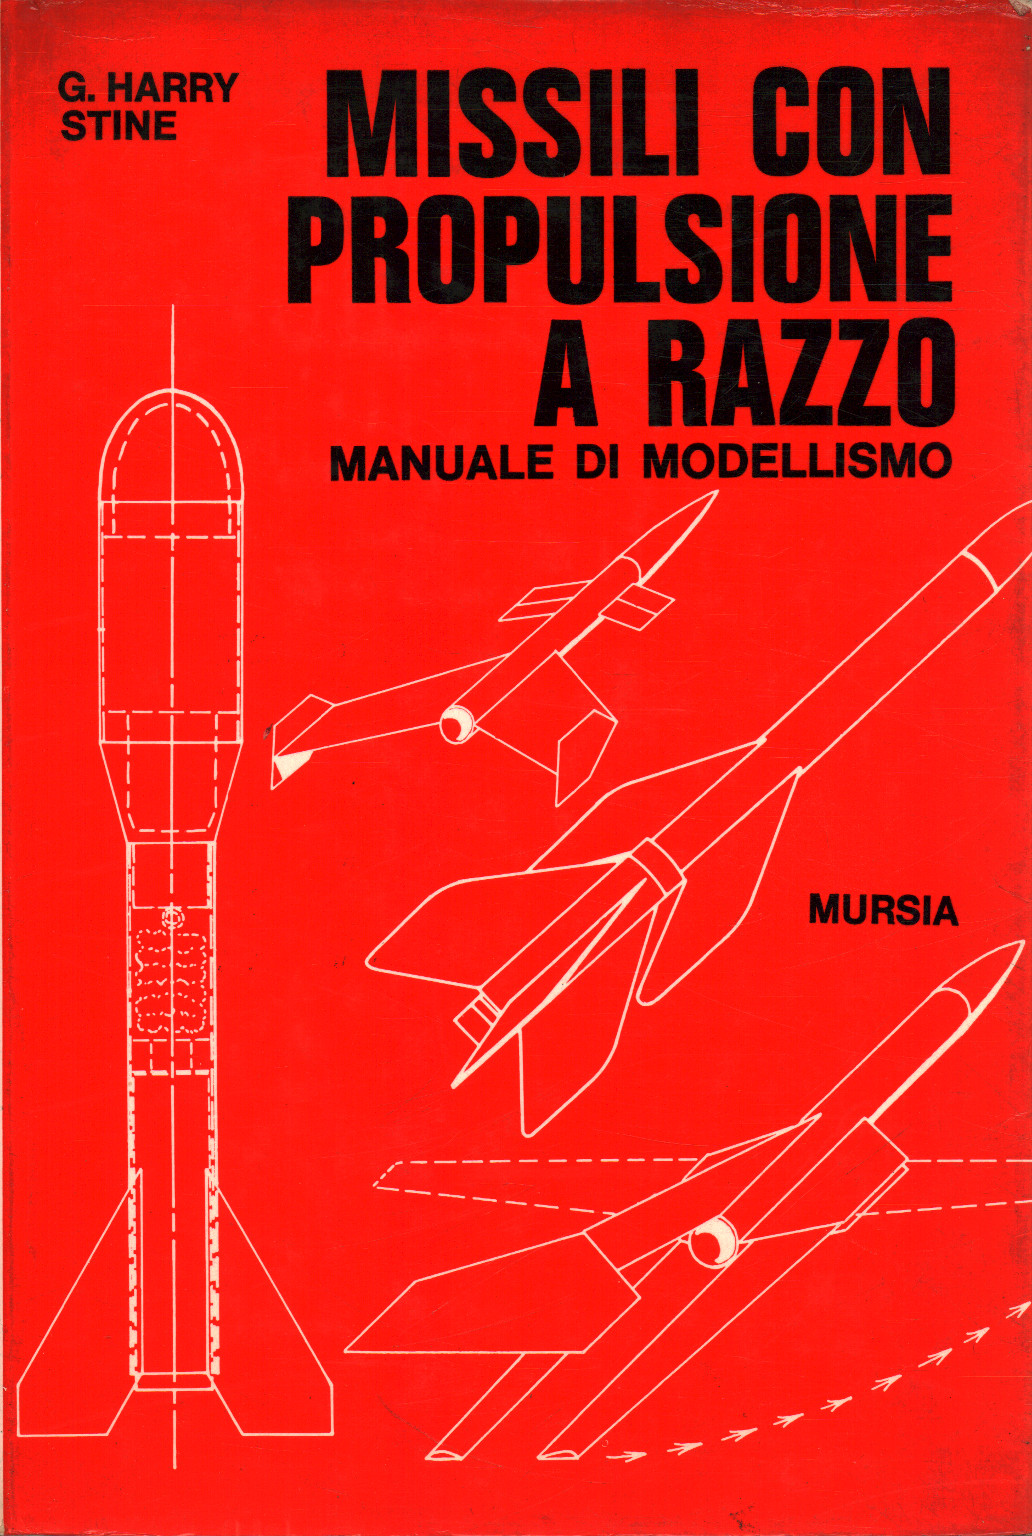 Rocket-propelled missiles